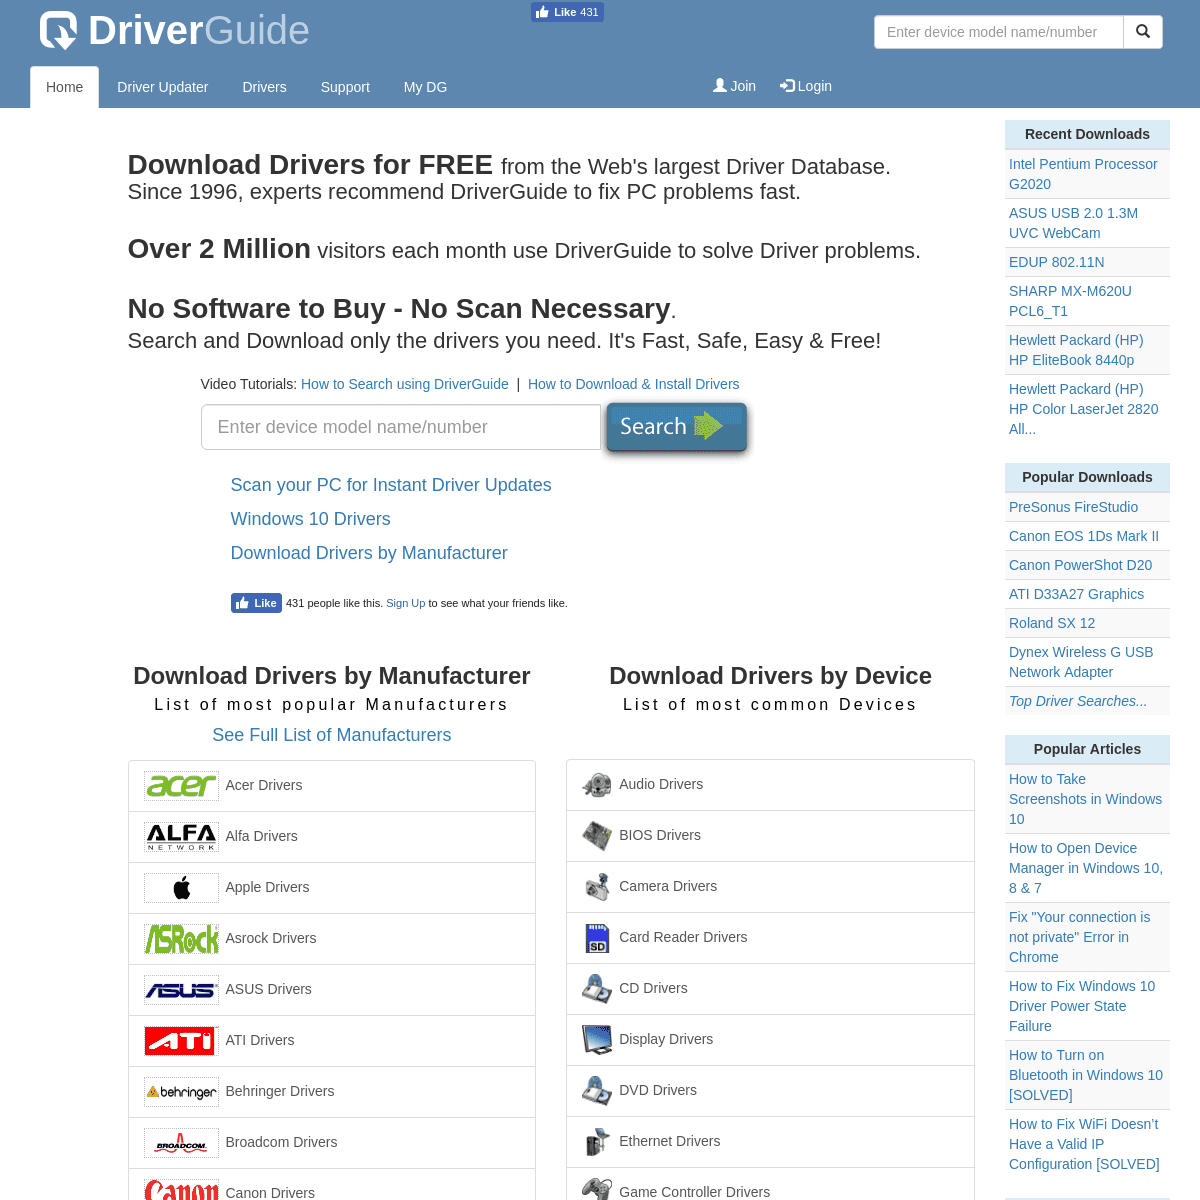 A complete backup of driverguide.com